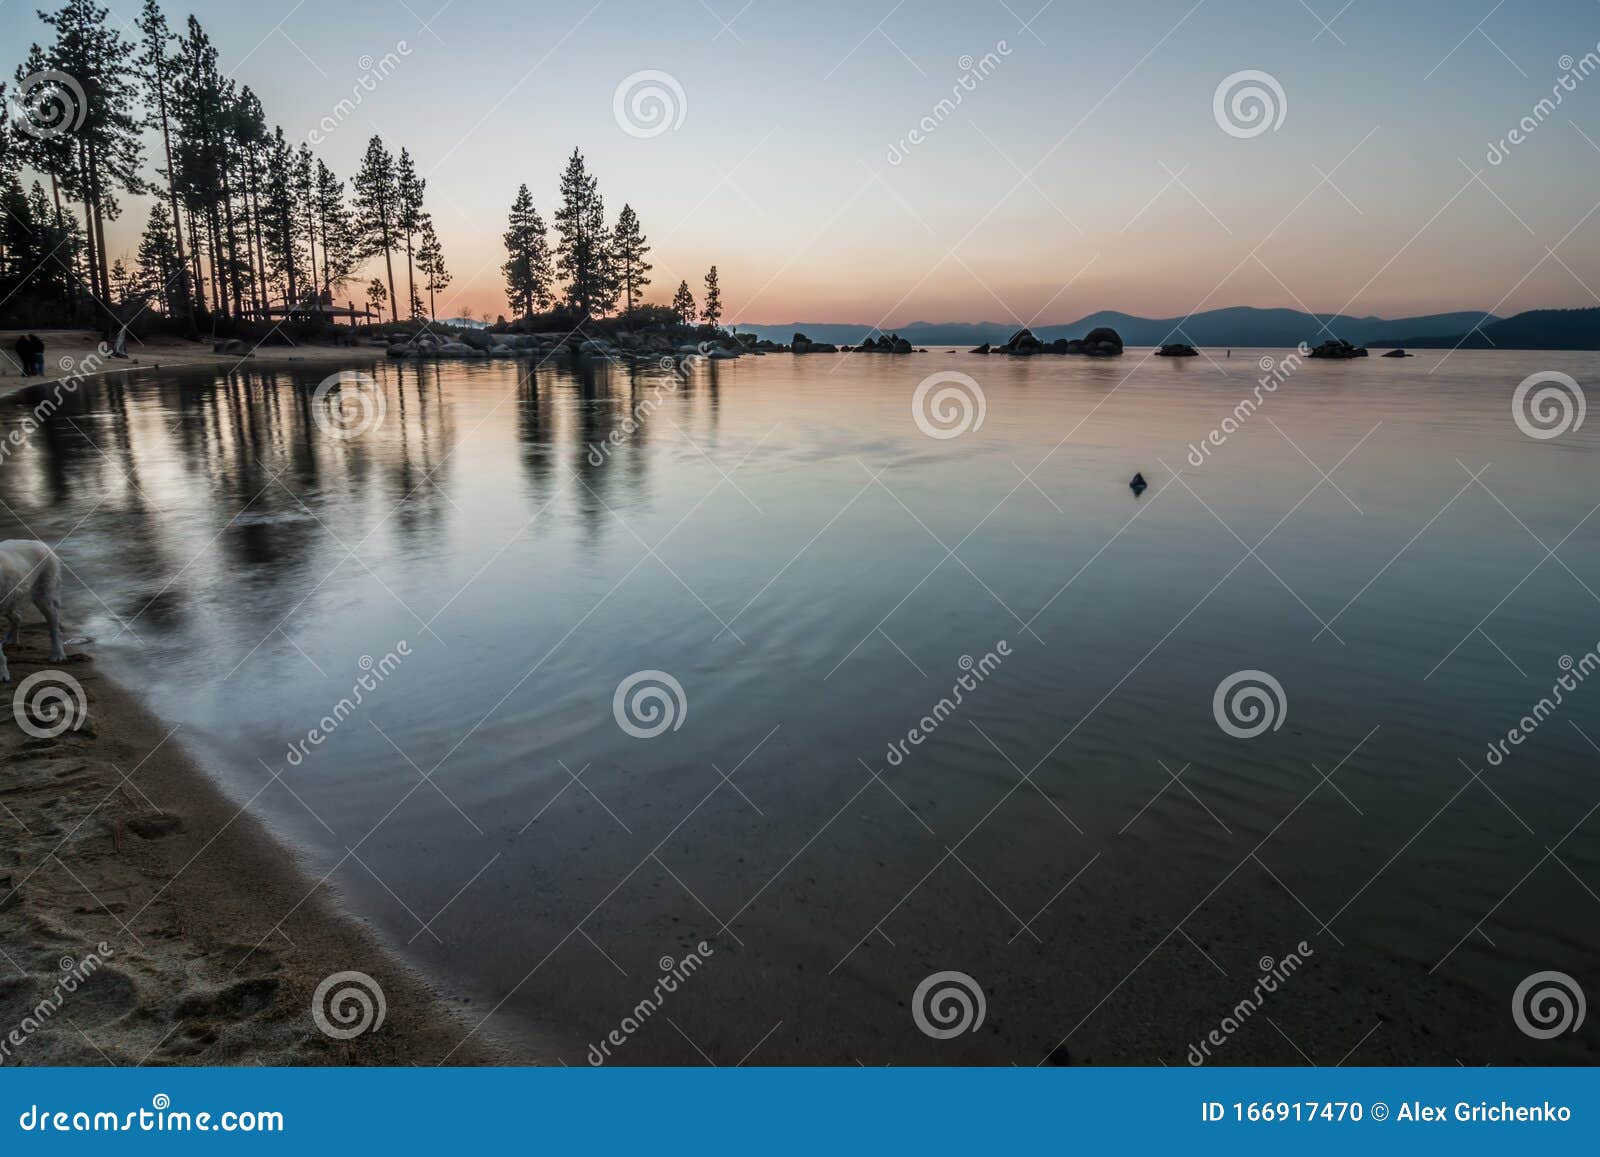 november sunset over lake tahoe in california